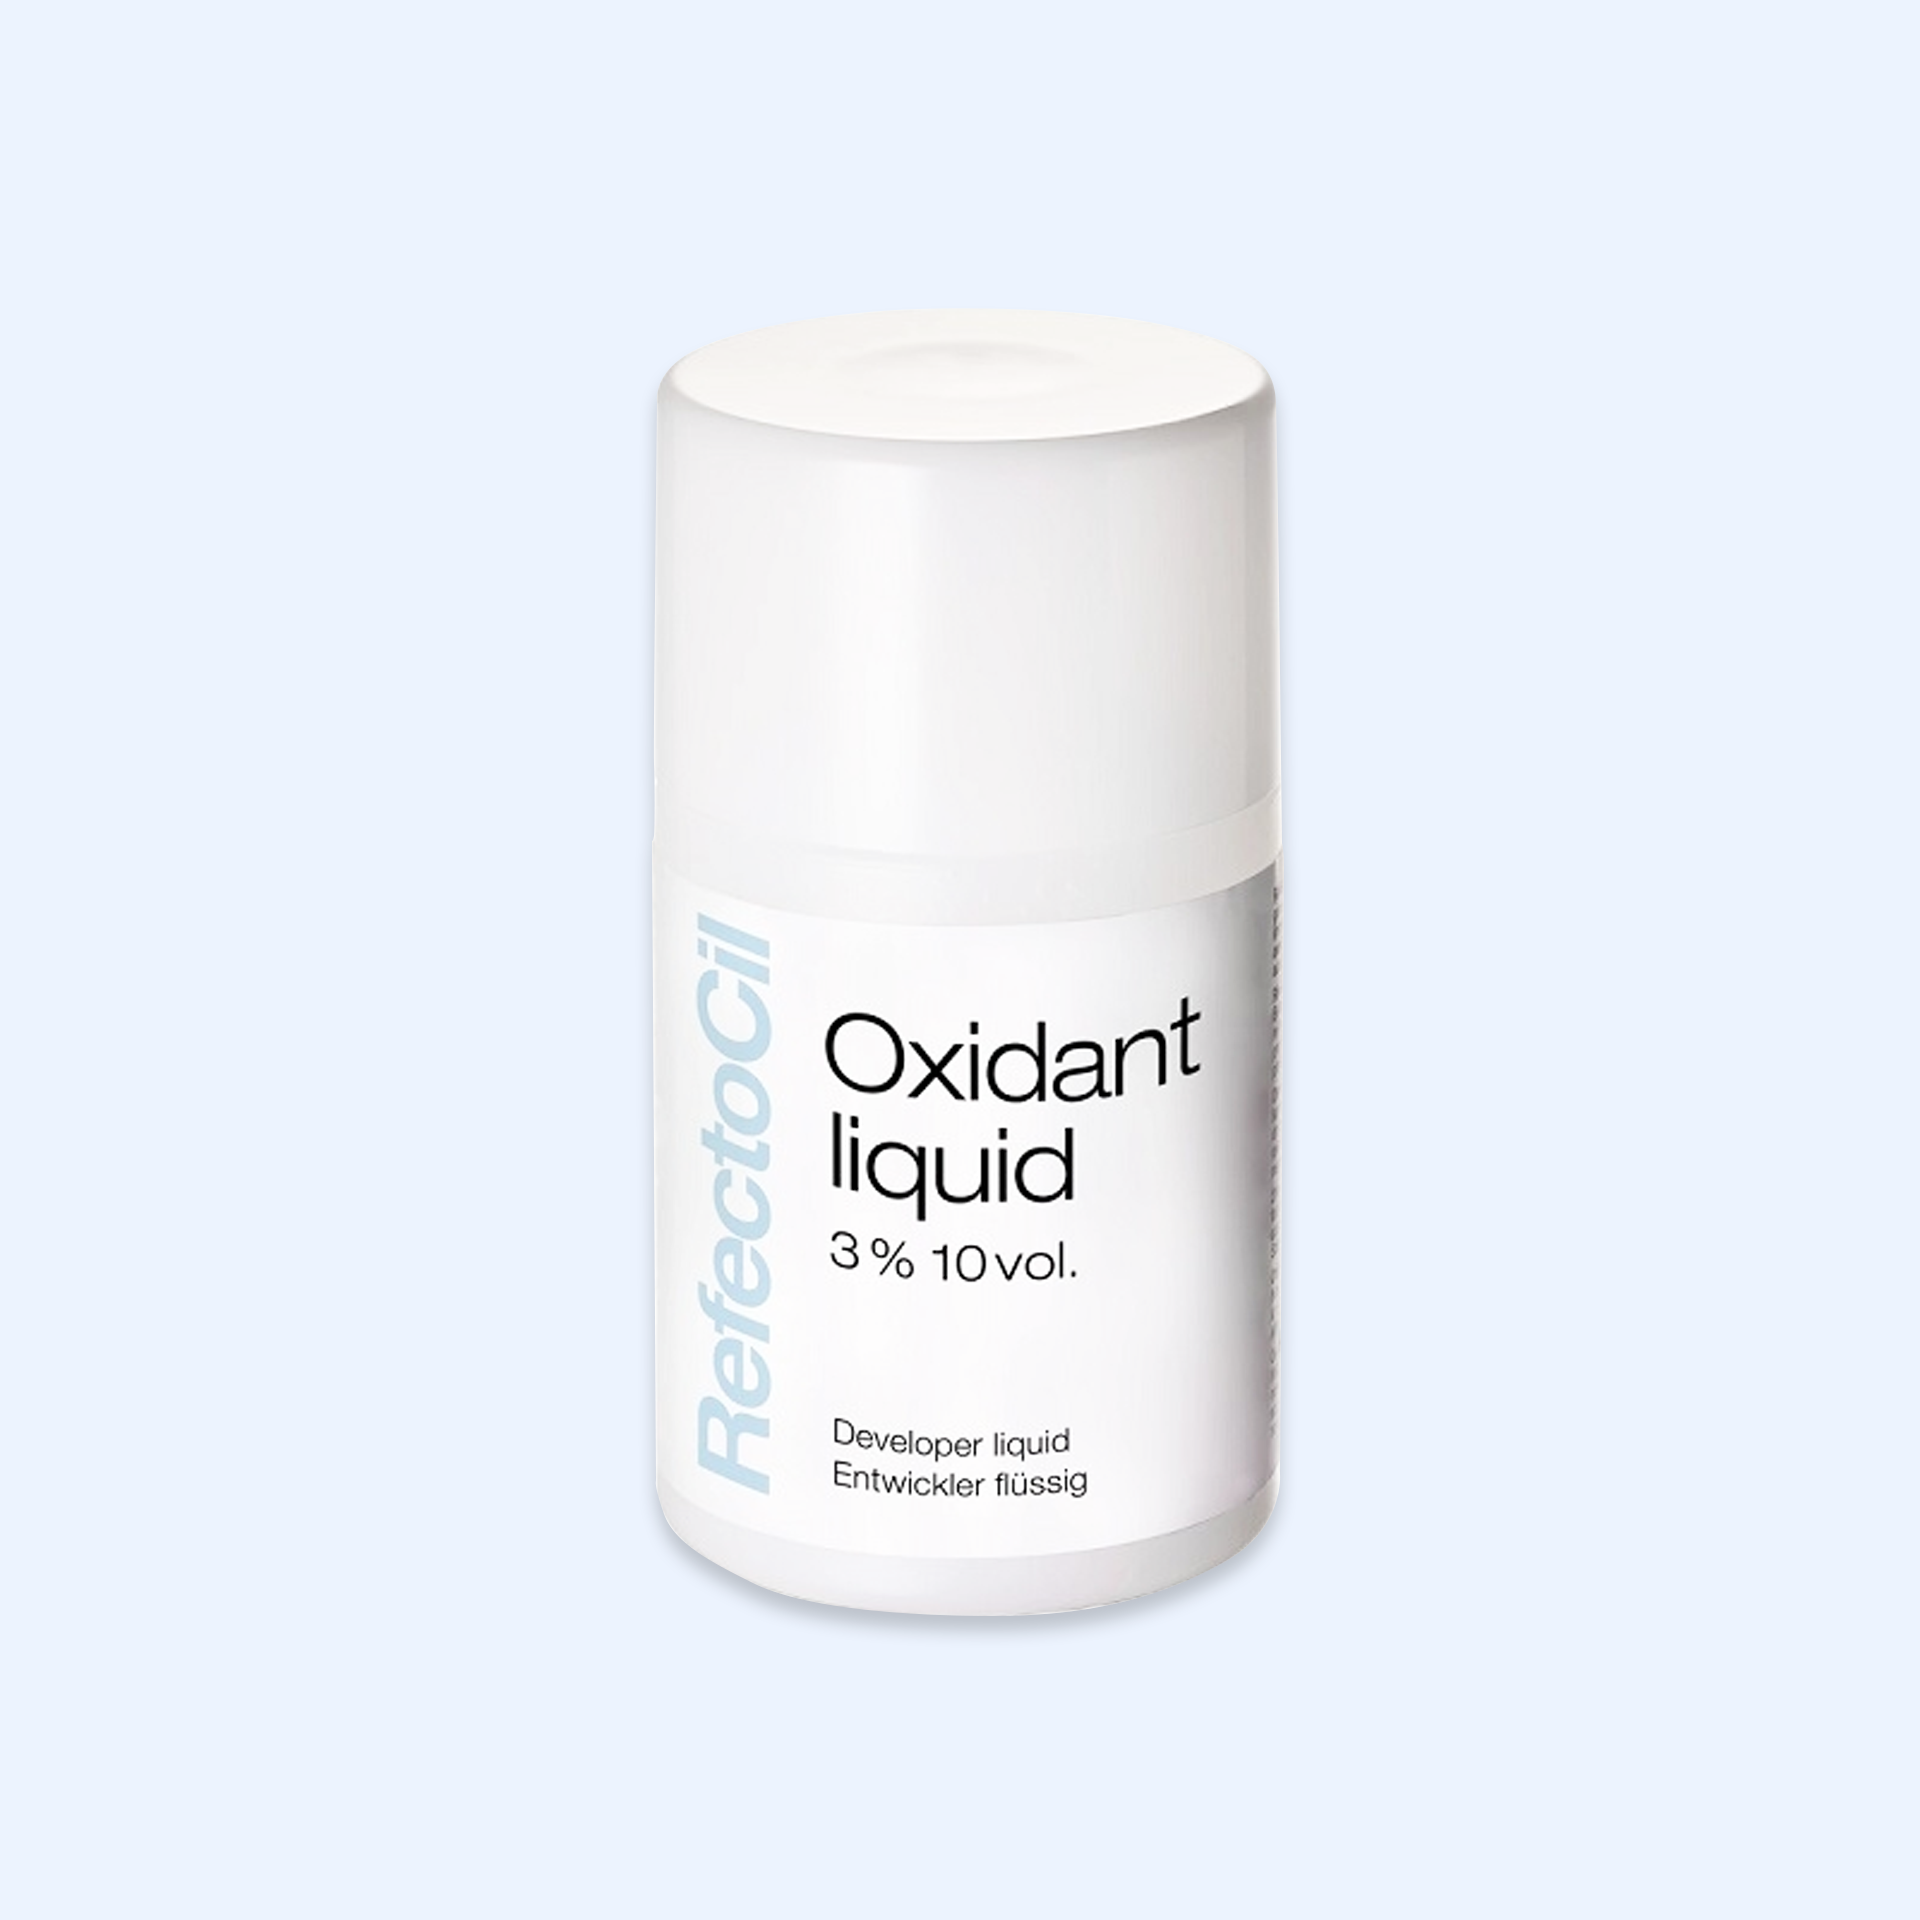 RefectoCil Oxidant Líquido 3% 10 vol. - 100ml